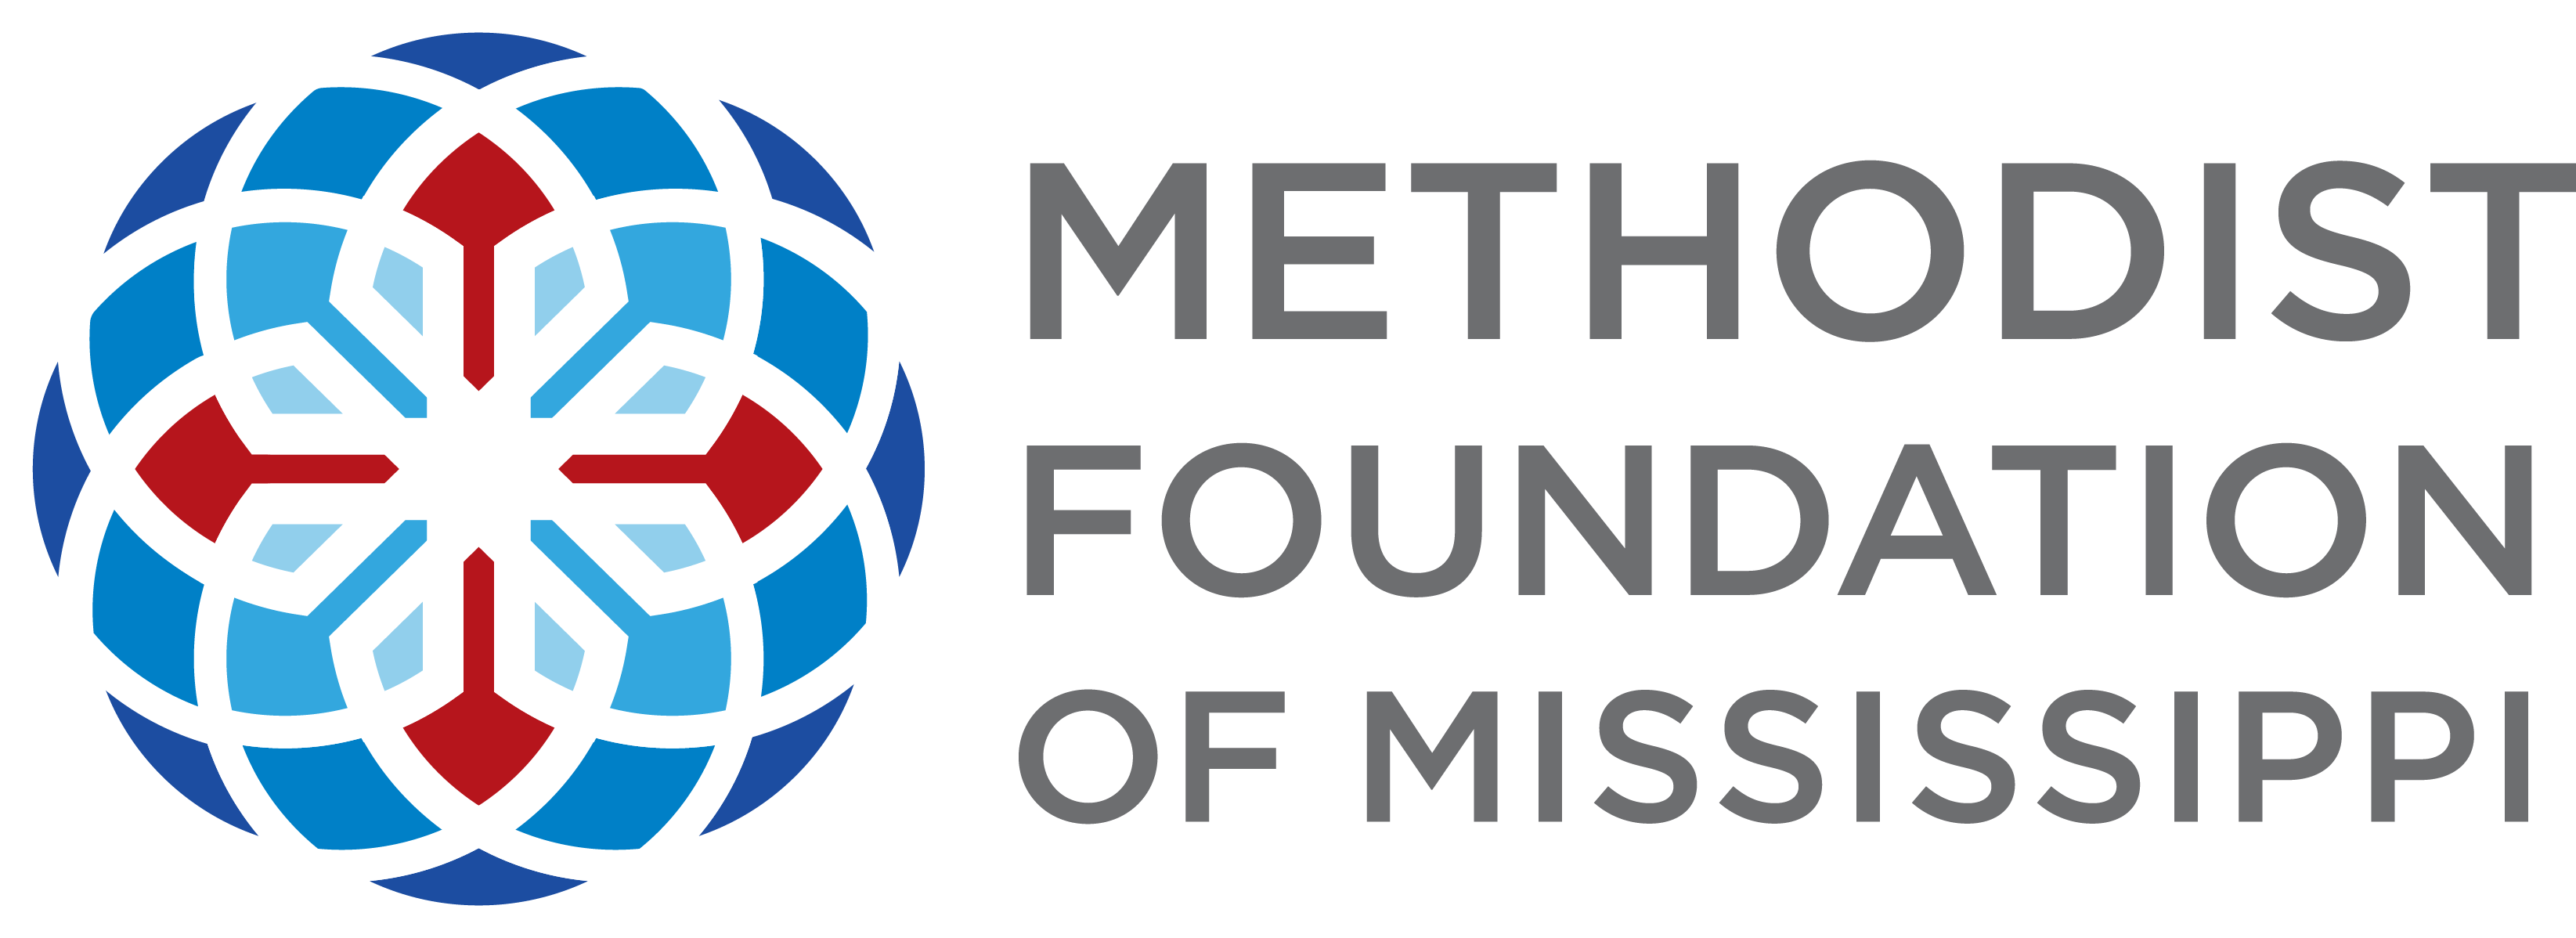 Methodist Foundation of Mississippi